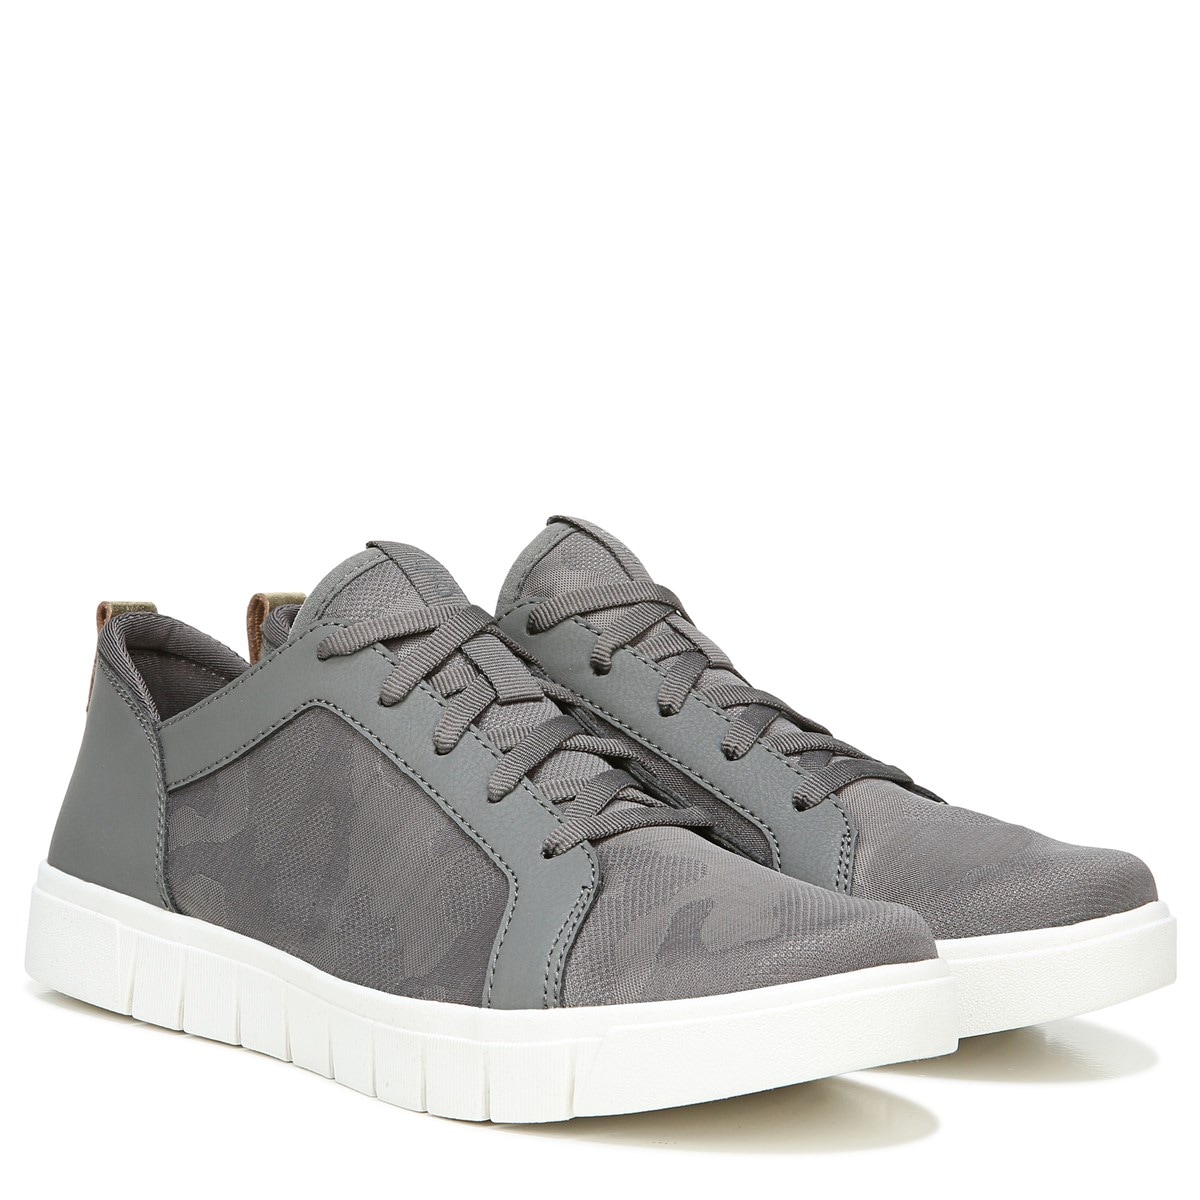 Ryka Haiku Sneaker in Charcoal Grey 